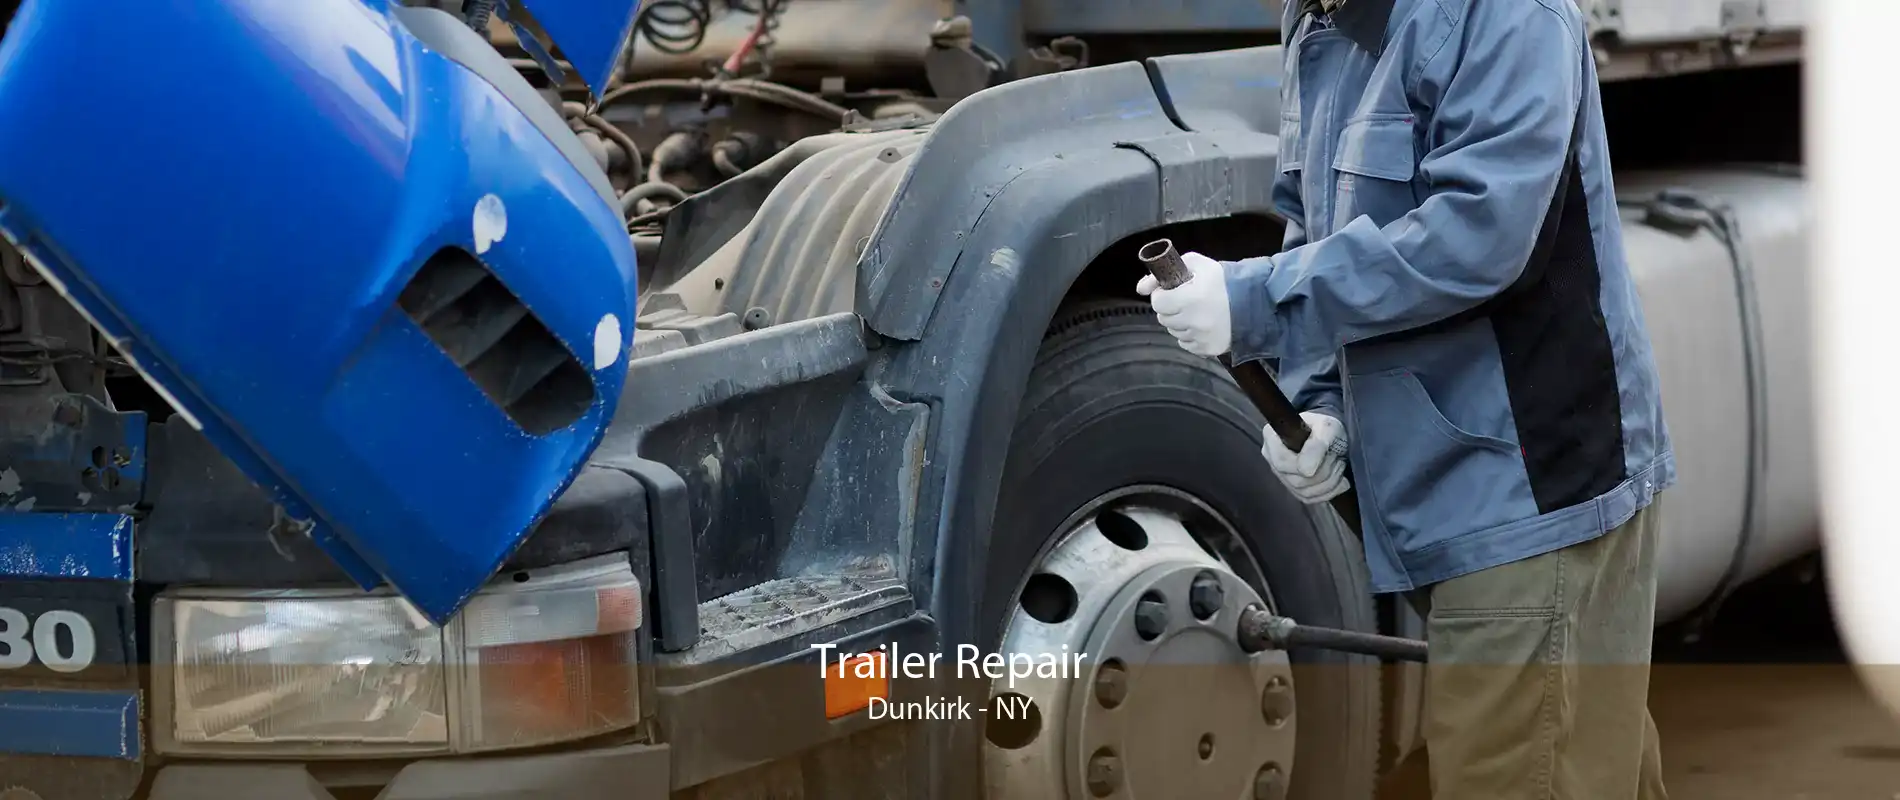 Trailer Repair Dunkirk - NY